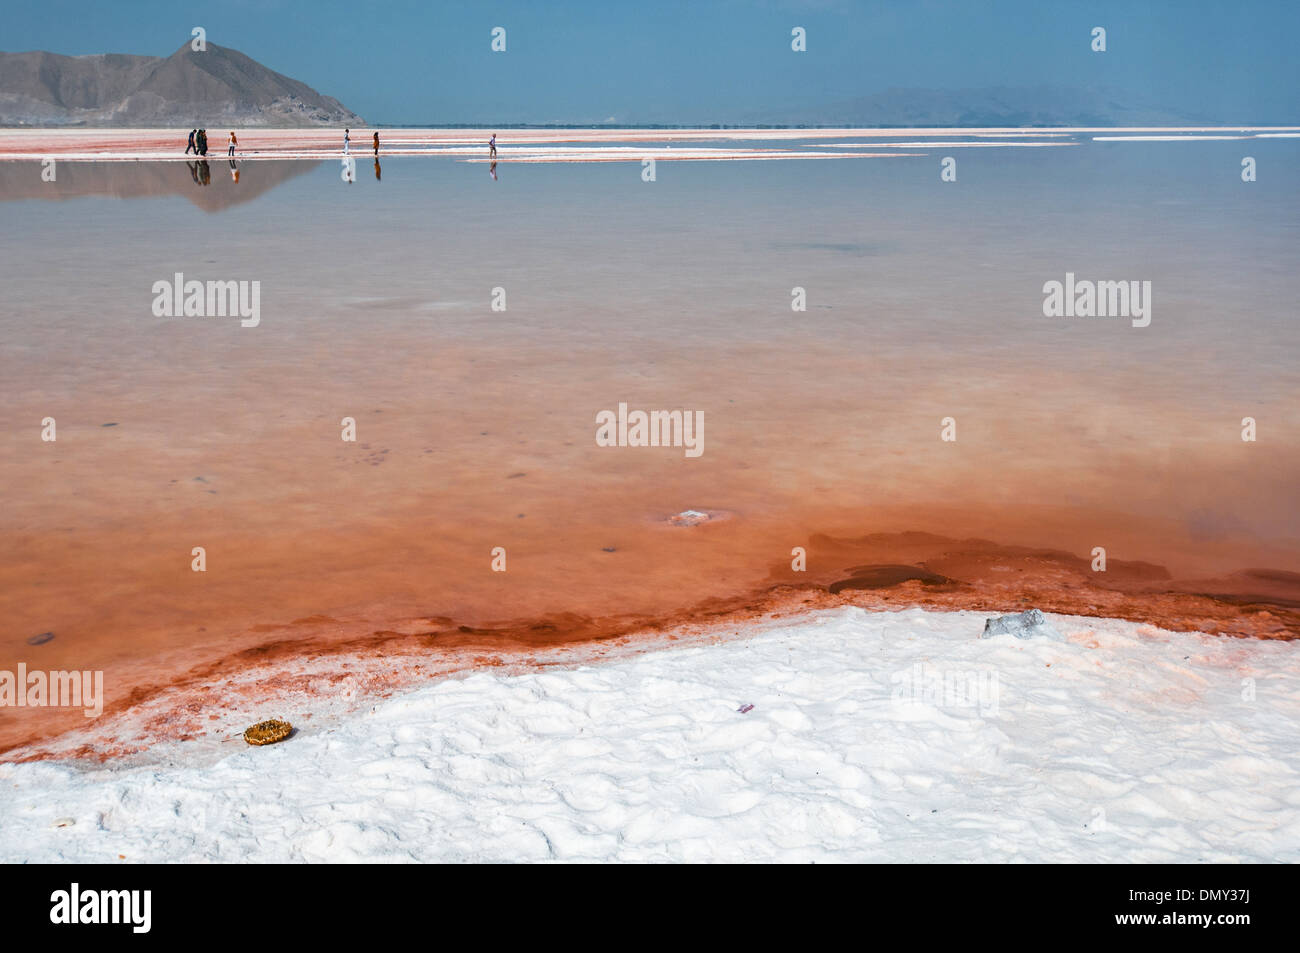 People walking in shallow waters of salt lake Urmia, West Azerbaijan province, Iran Stock Photo